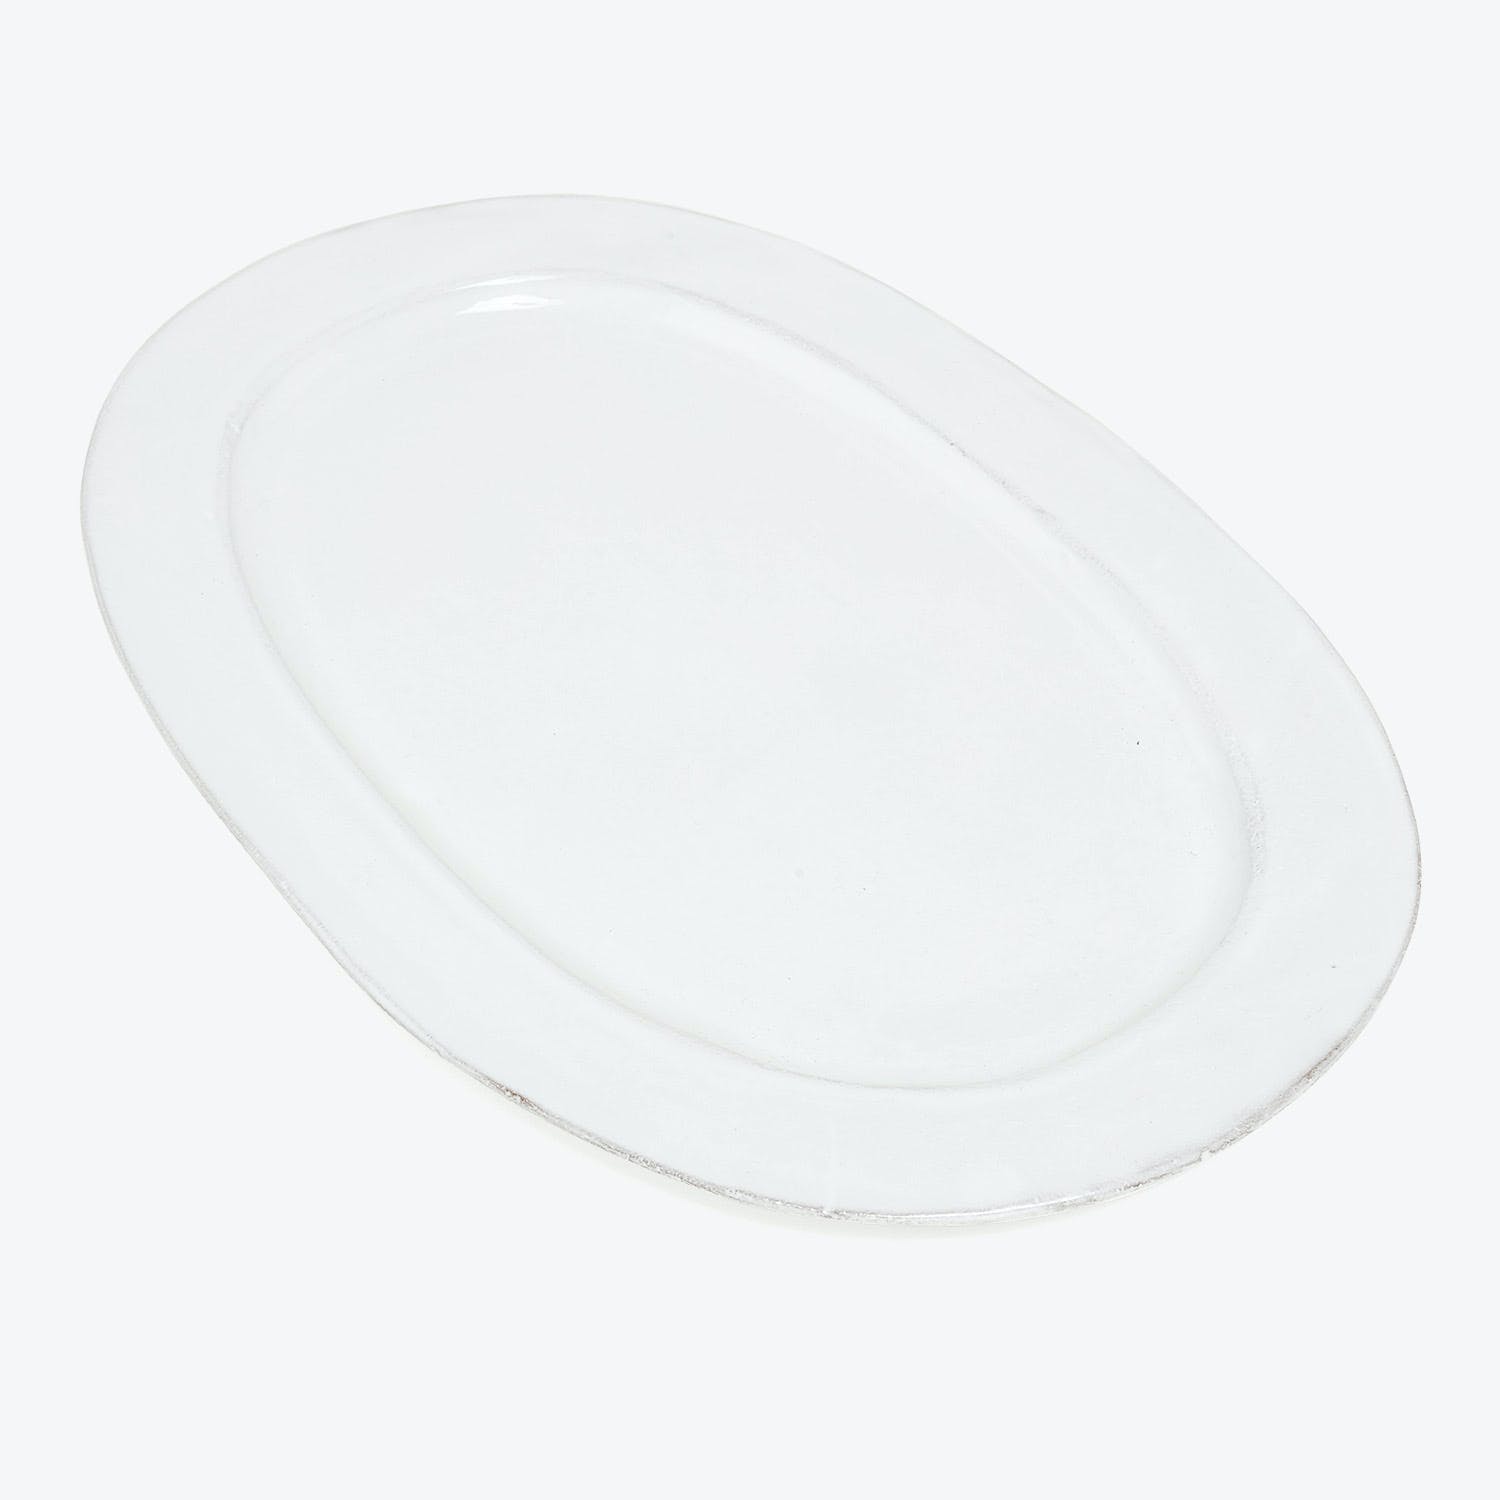 Minimalist white plate with a glossy finish reflecting light.